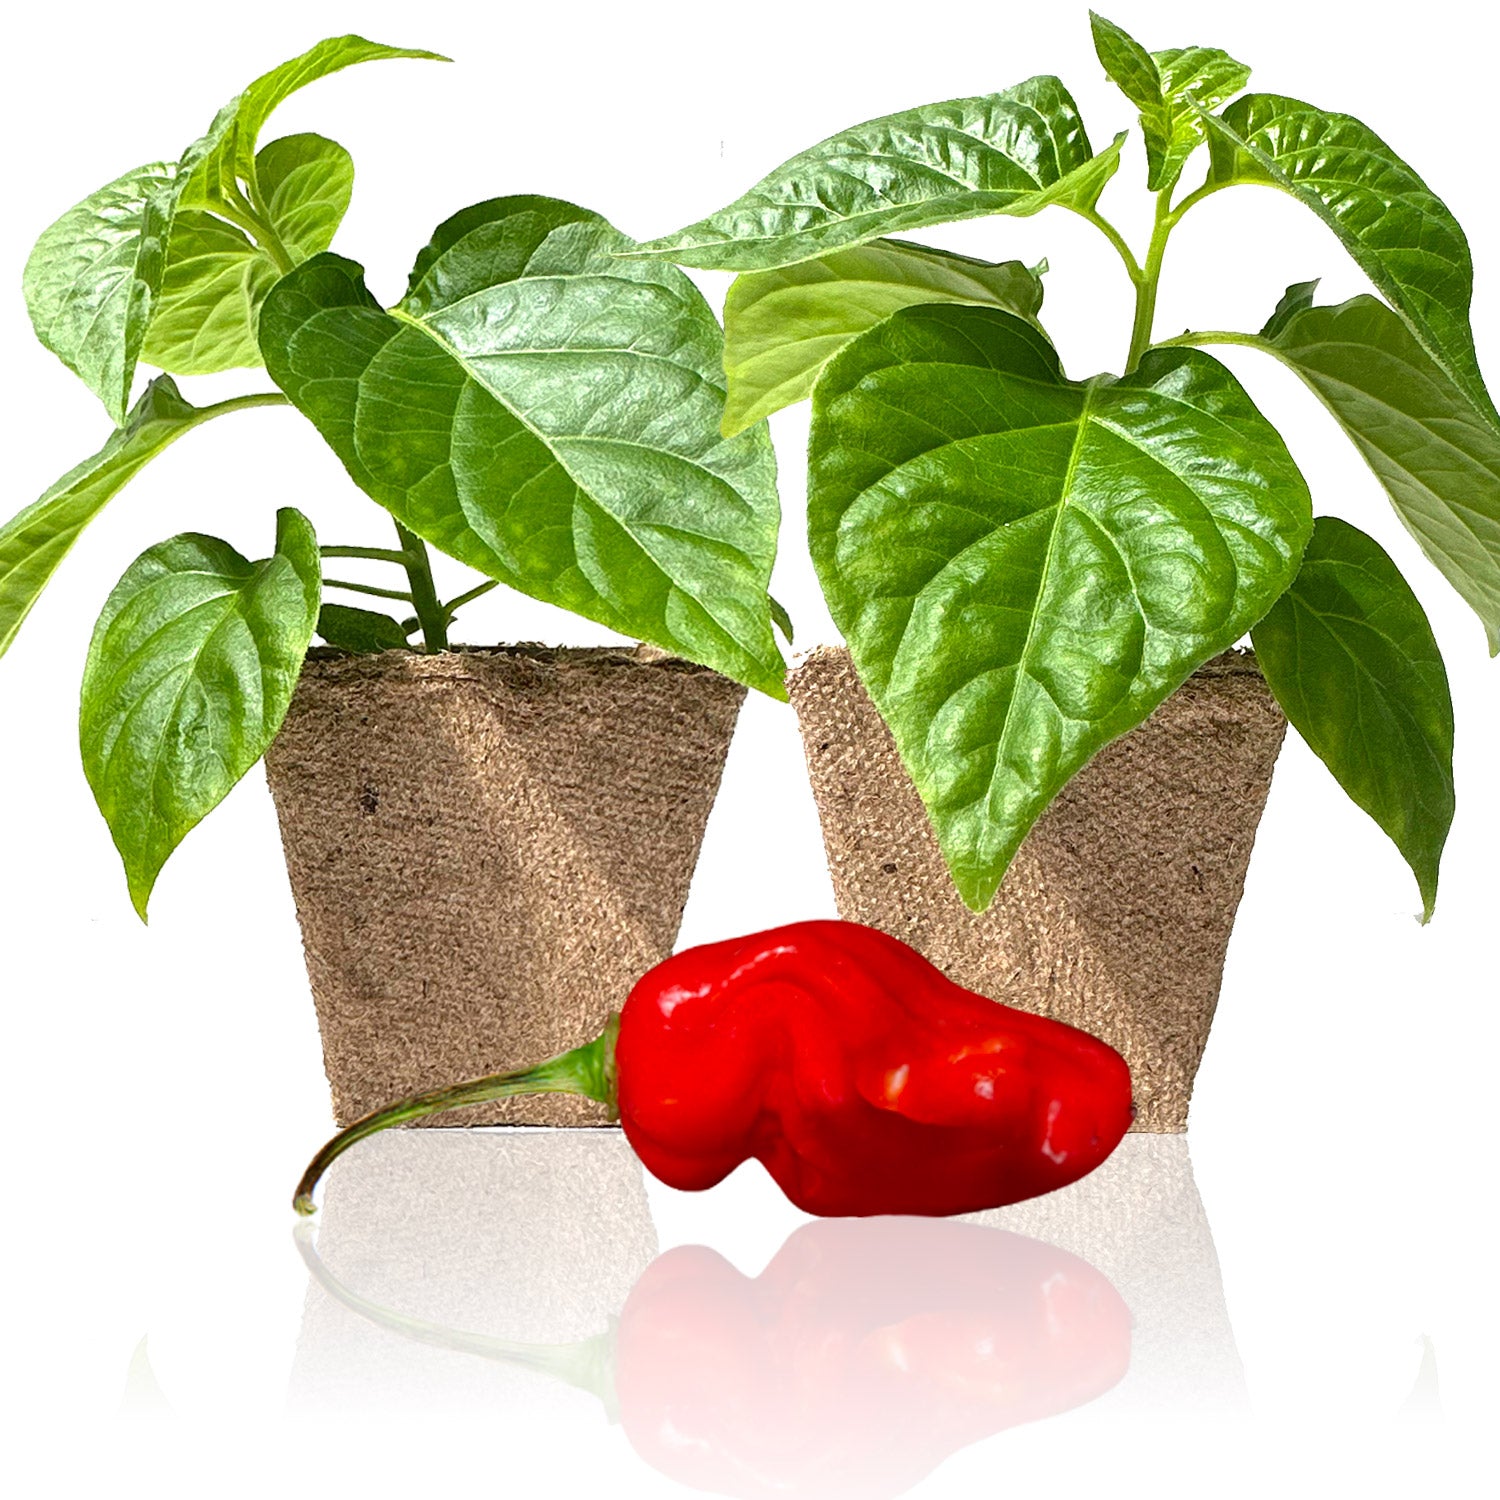 Pepper Joe's Red Devil's Tongue pepper plants for sale